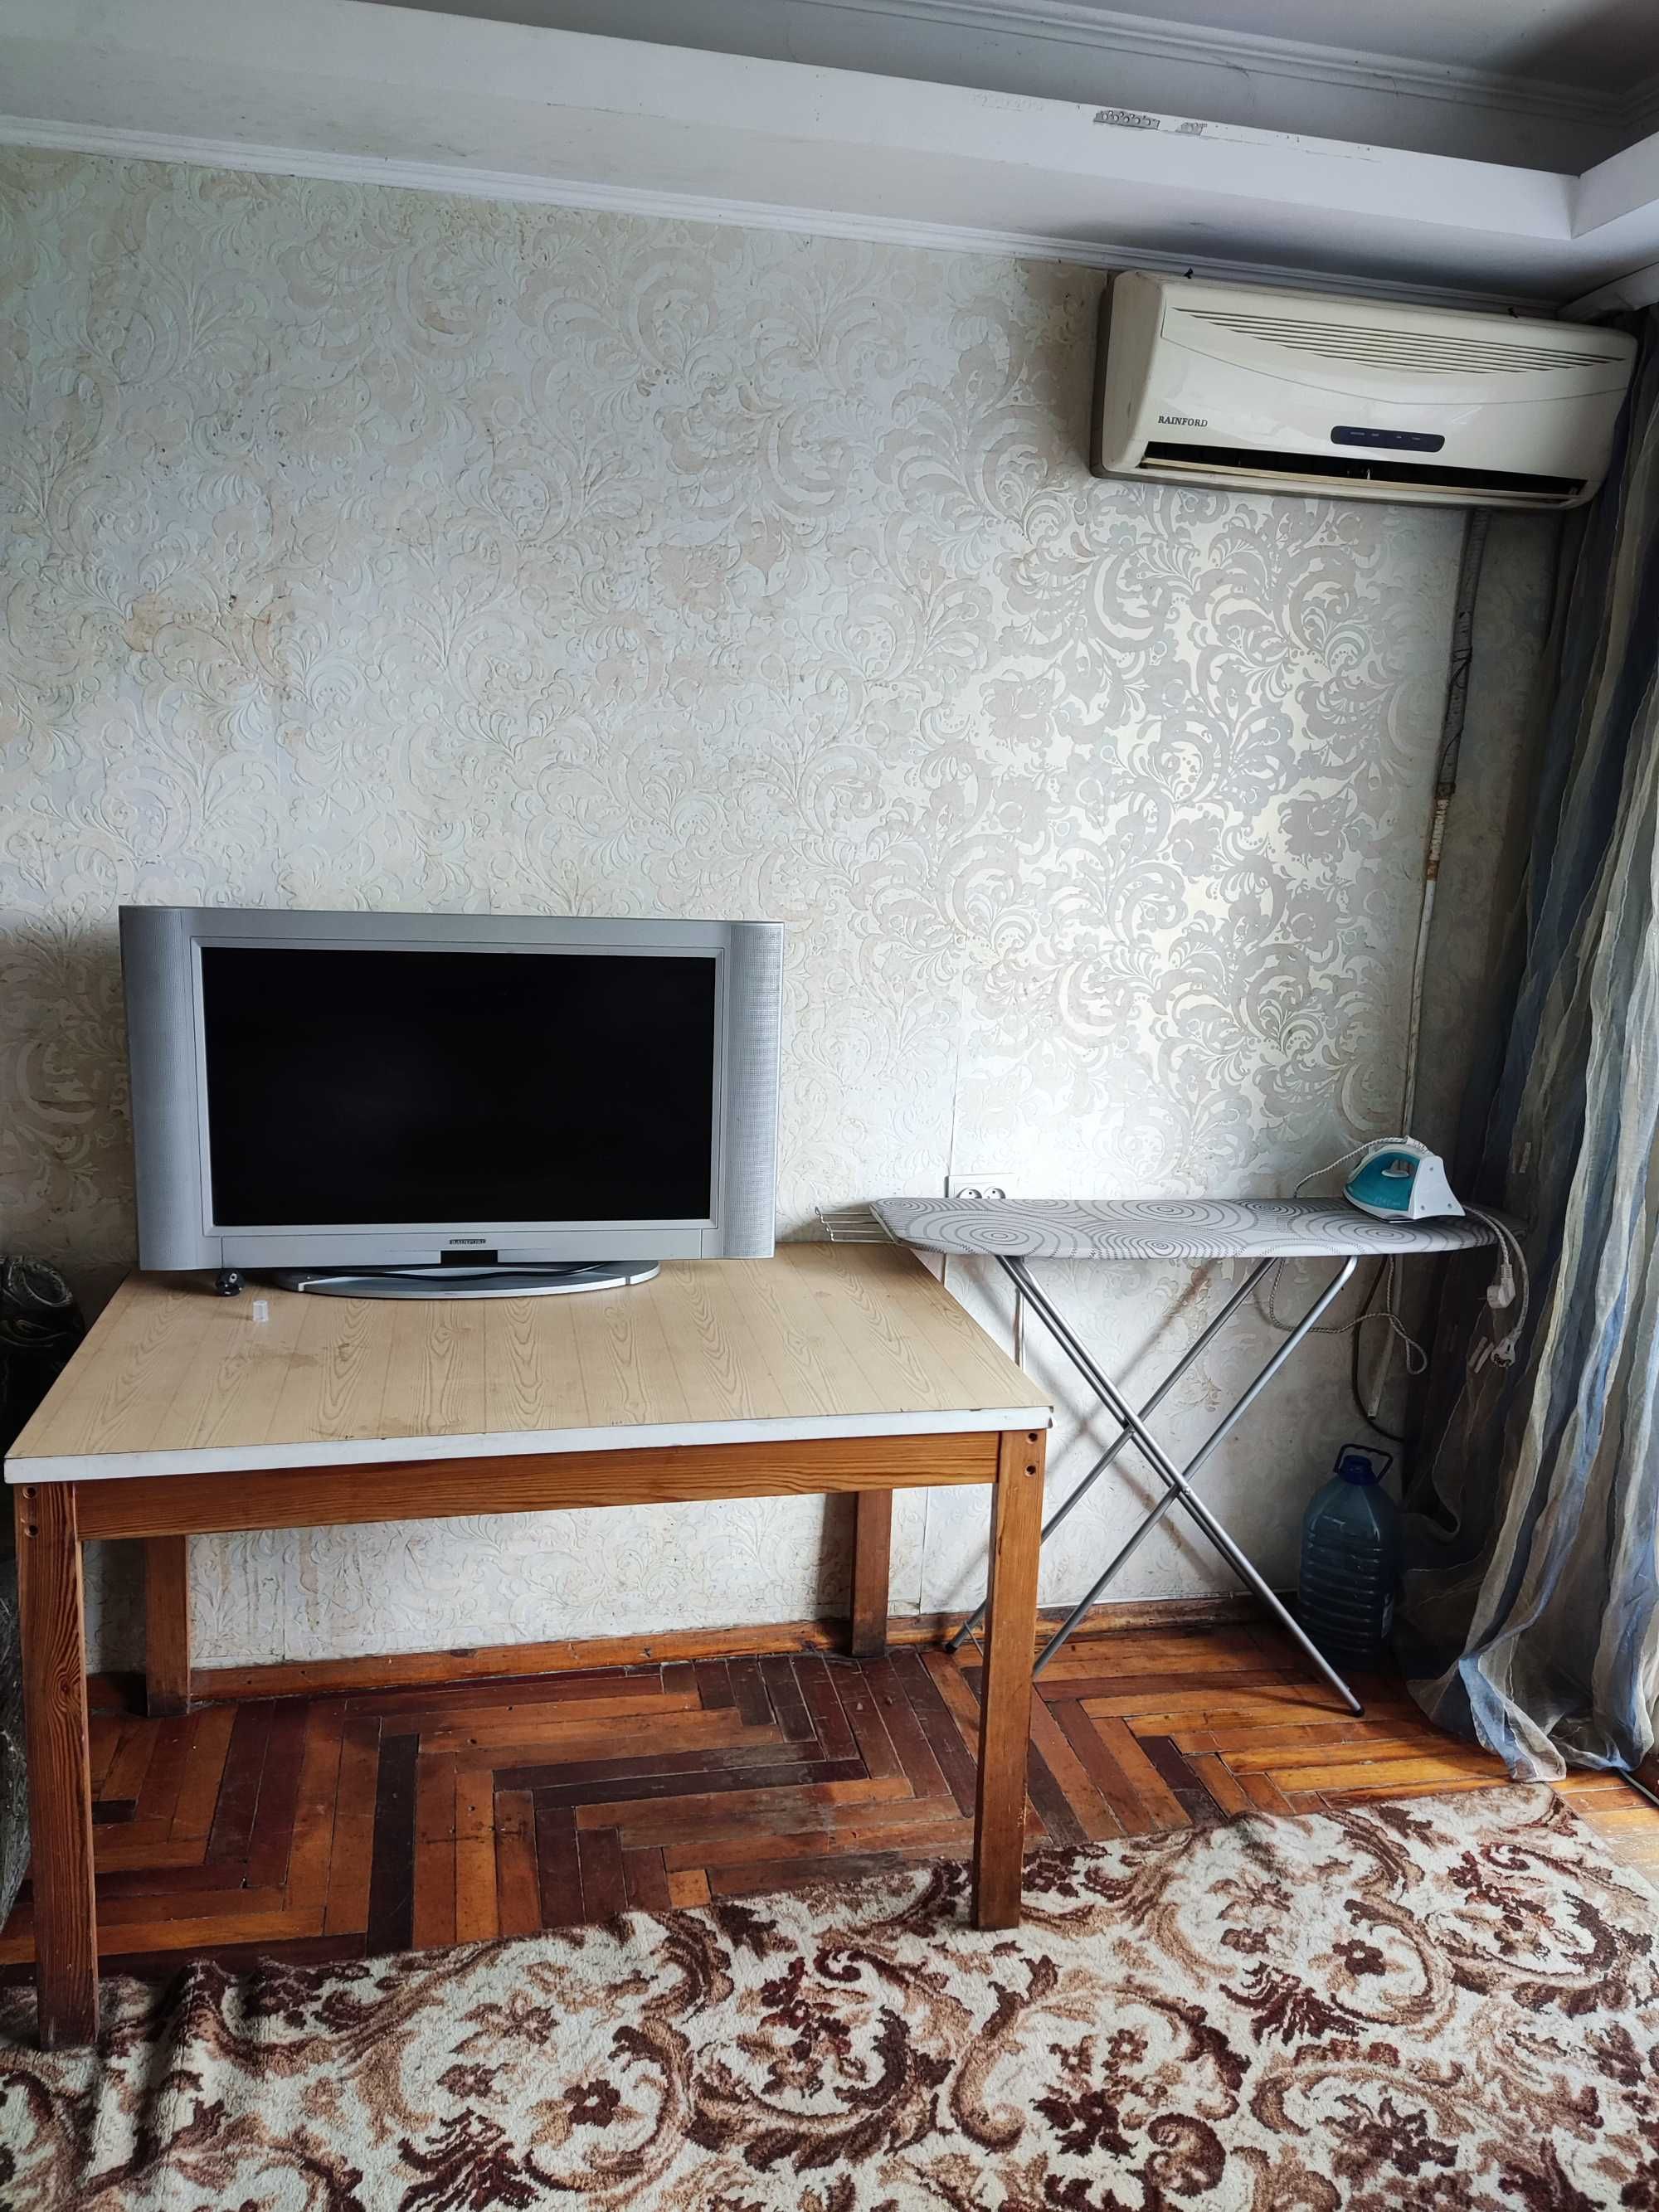 Сдам 1-комнатную квартиру в Александровском районе 6000 грн.